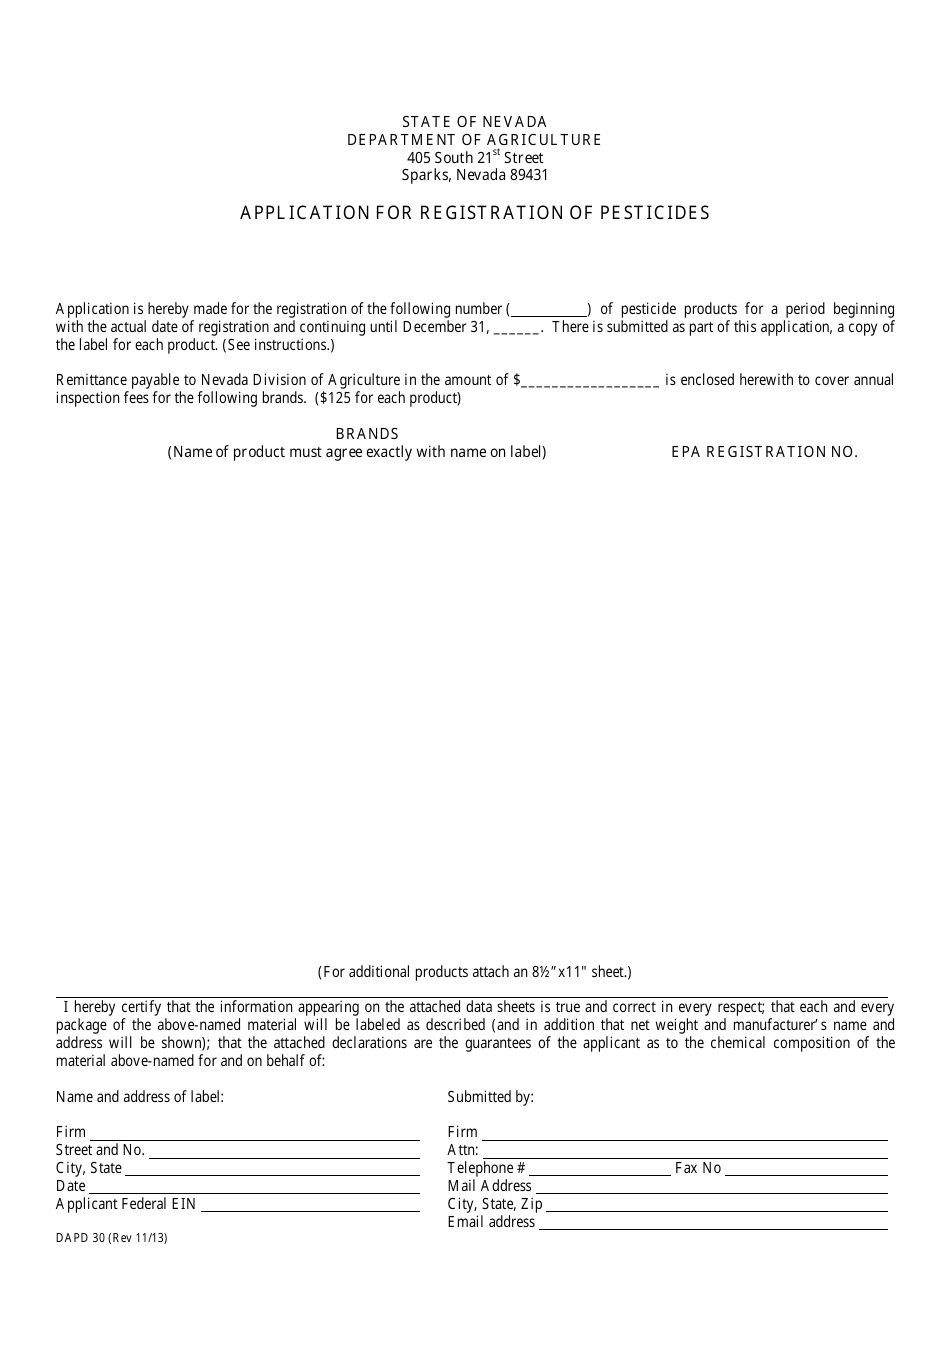 Form DAPD30 Application for Registration of Pesticides - Nevada, Page 1